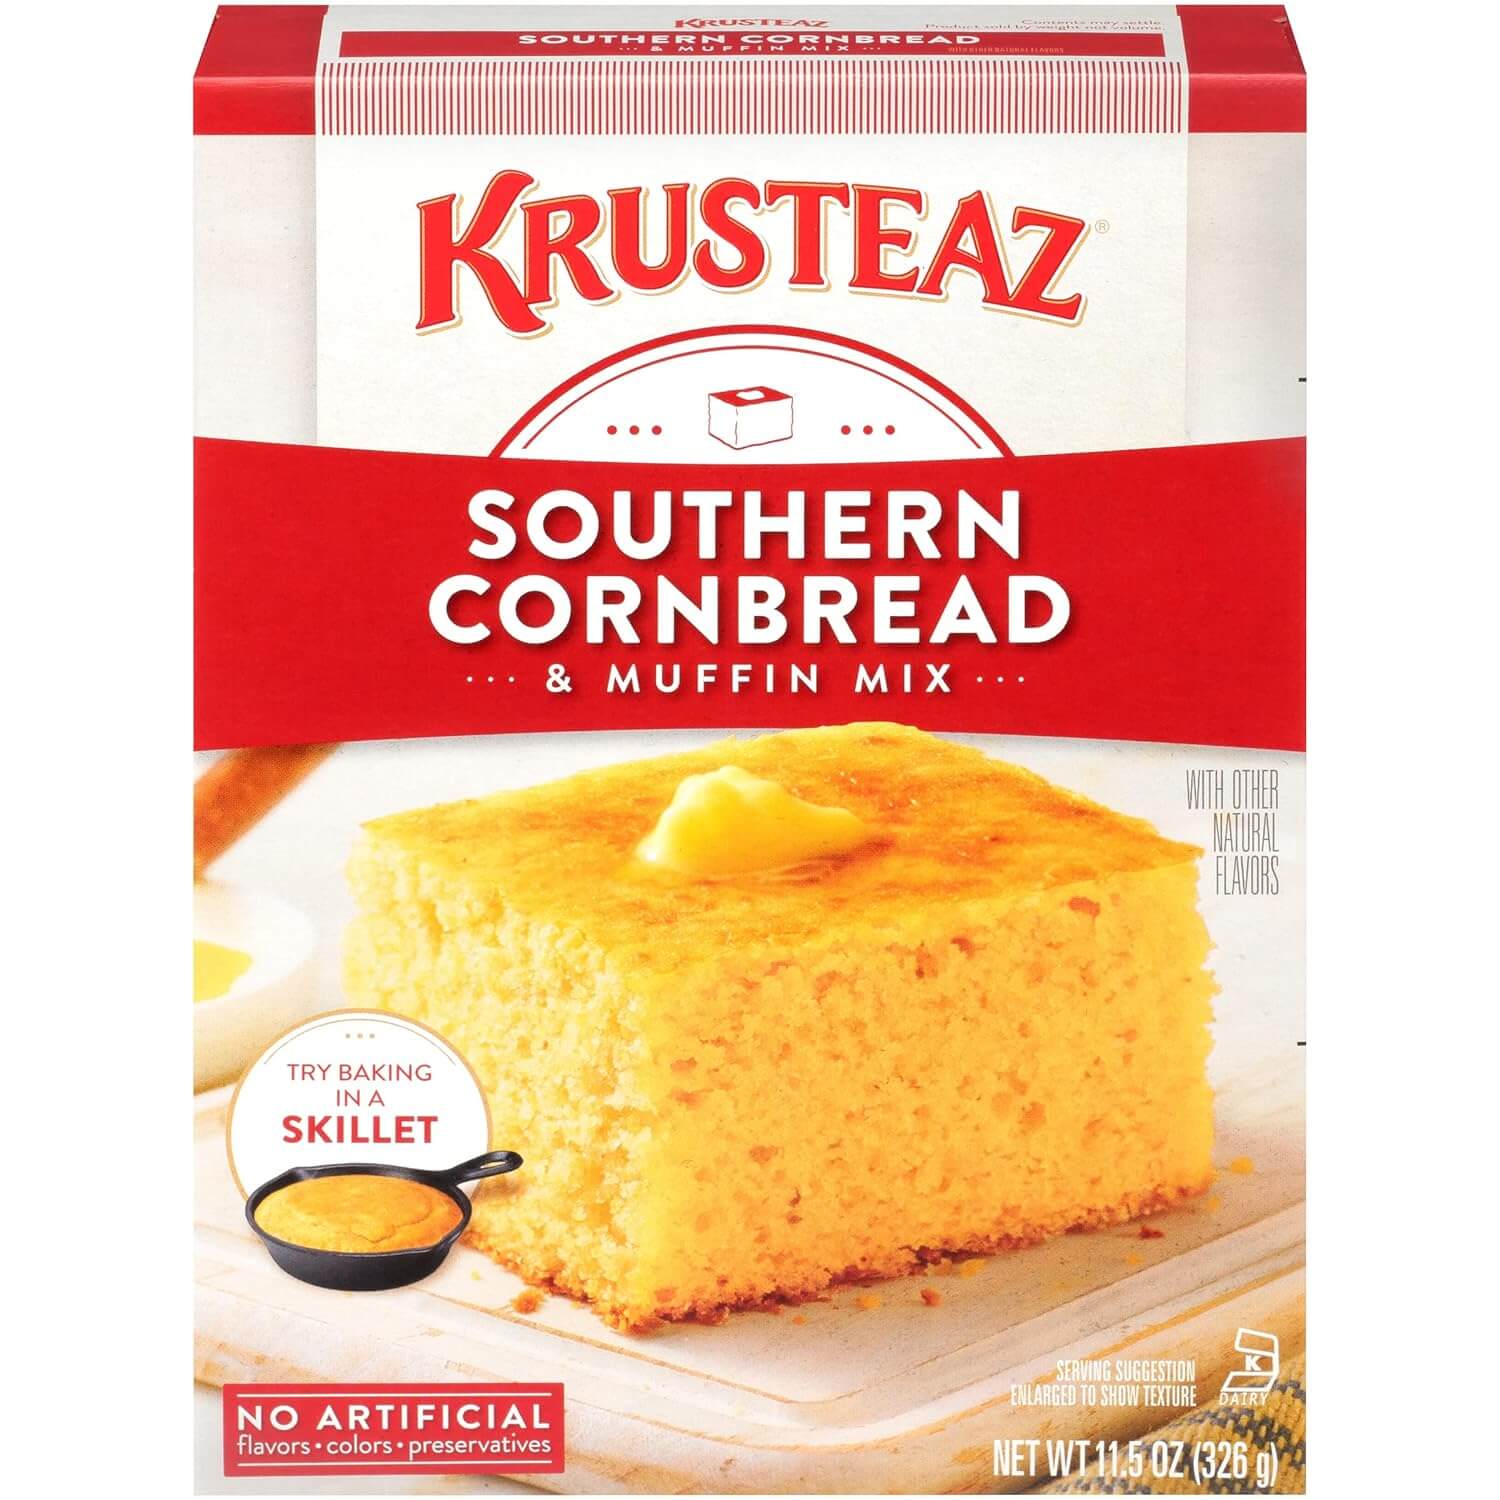 Krusteaz Southern Cornbread and Muffin Mix